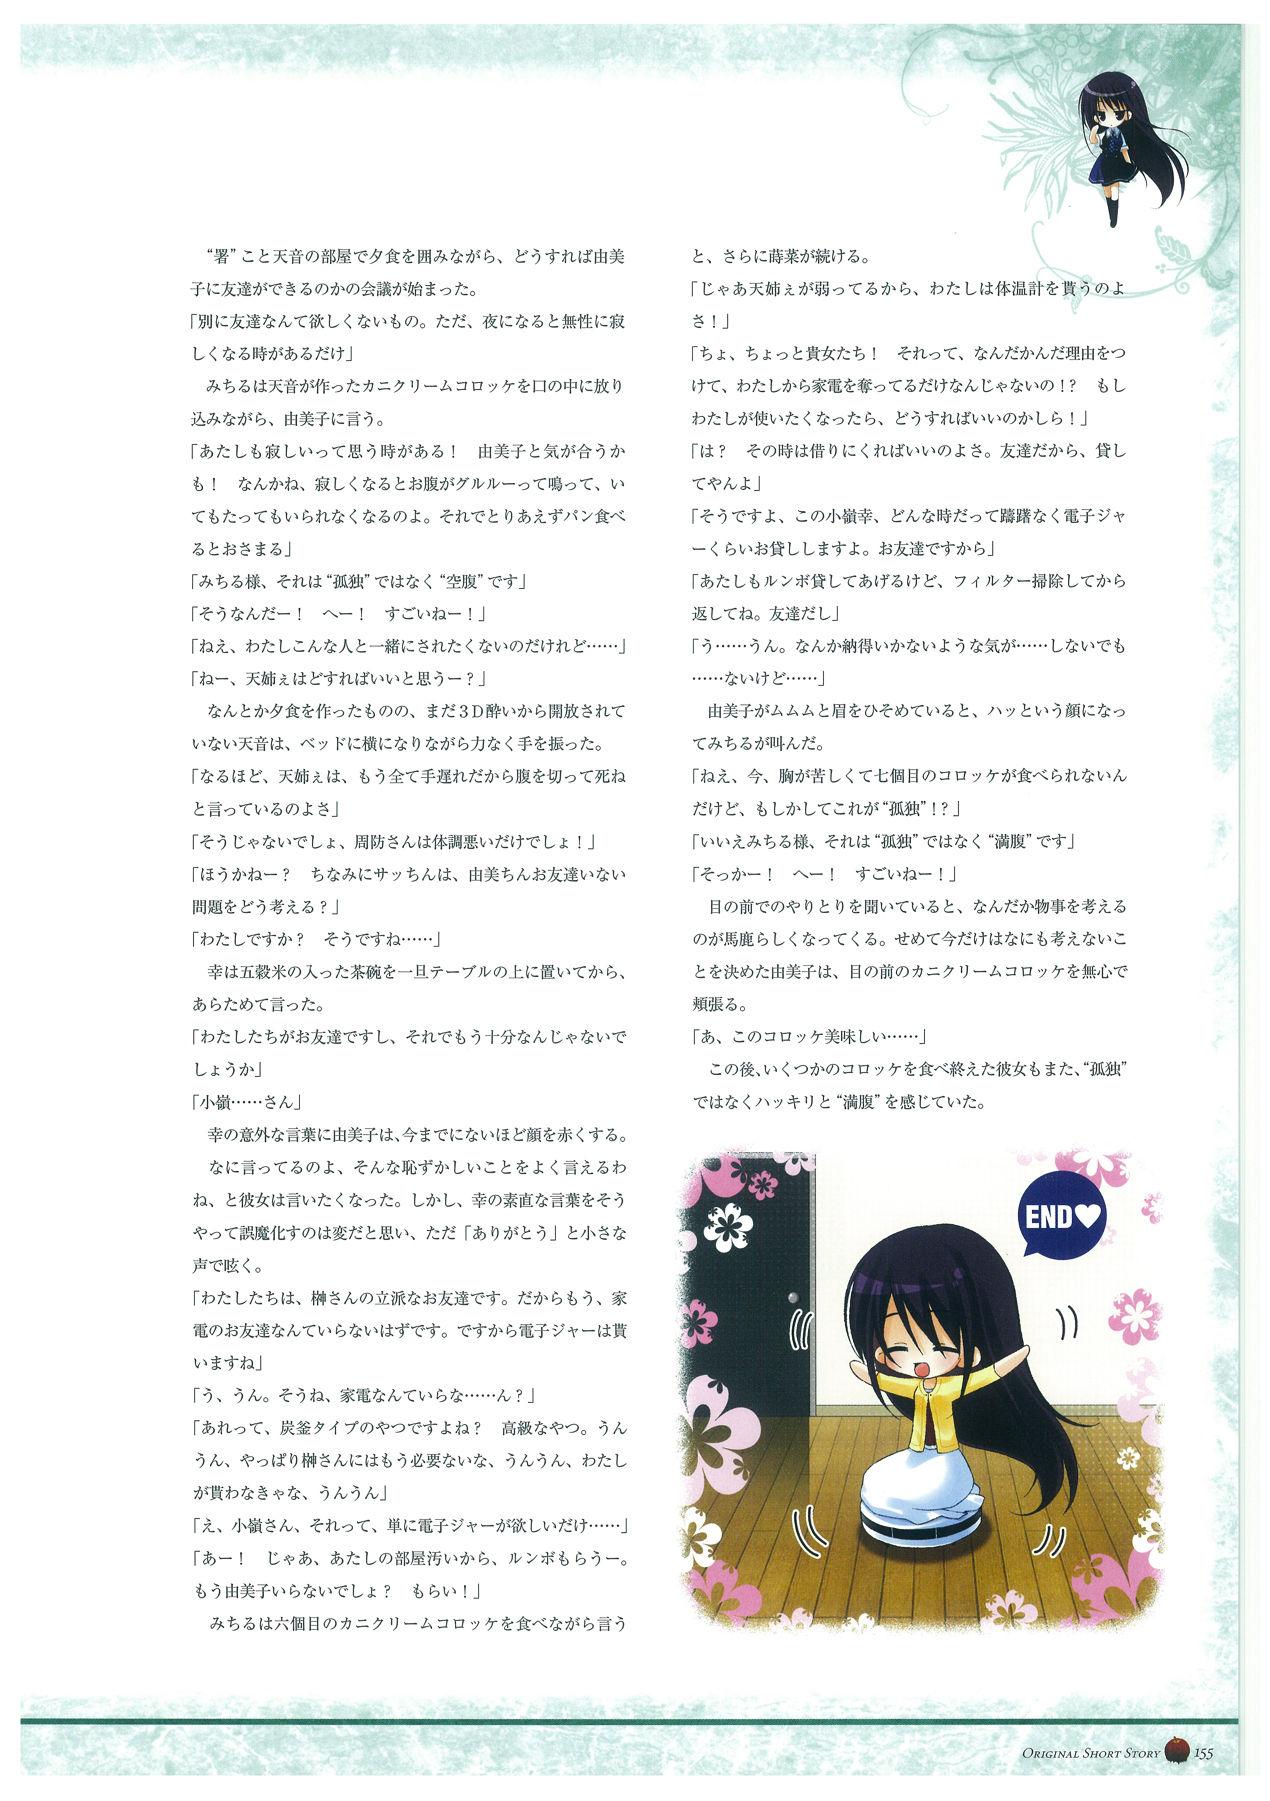 Grisaia no Rakuen Visual Fanbook 158